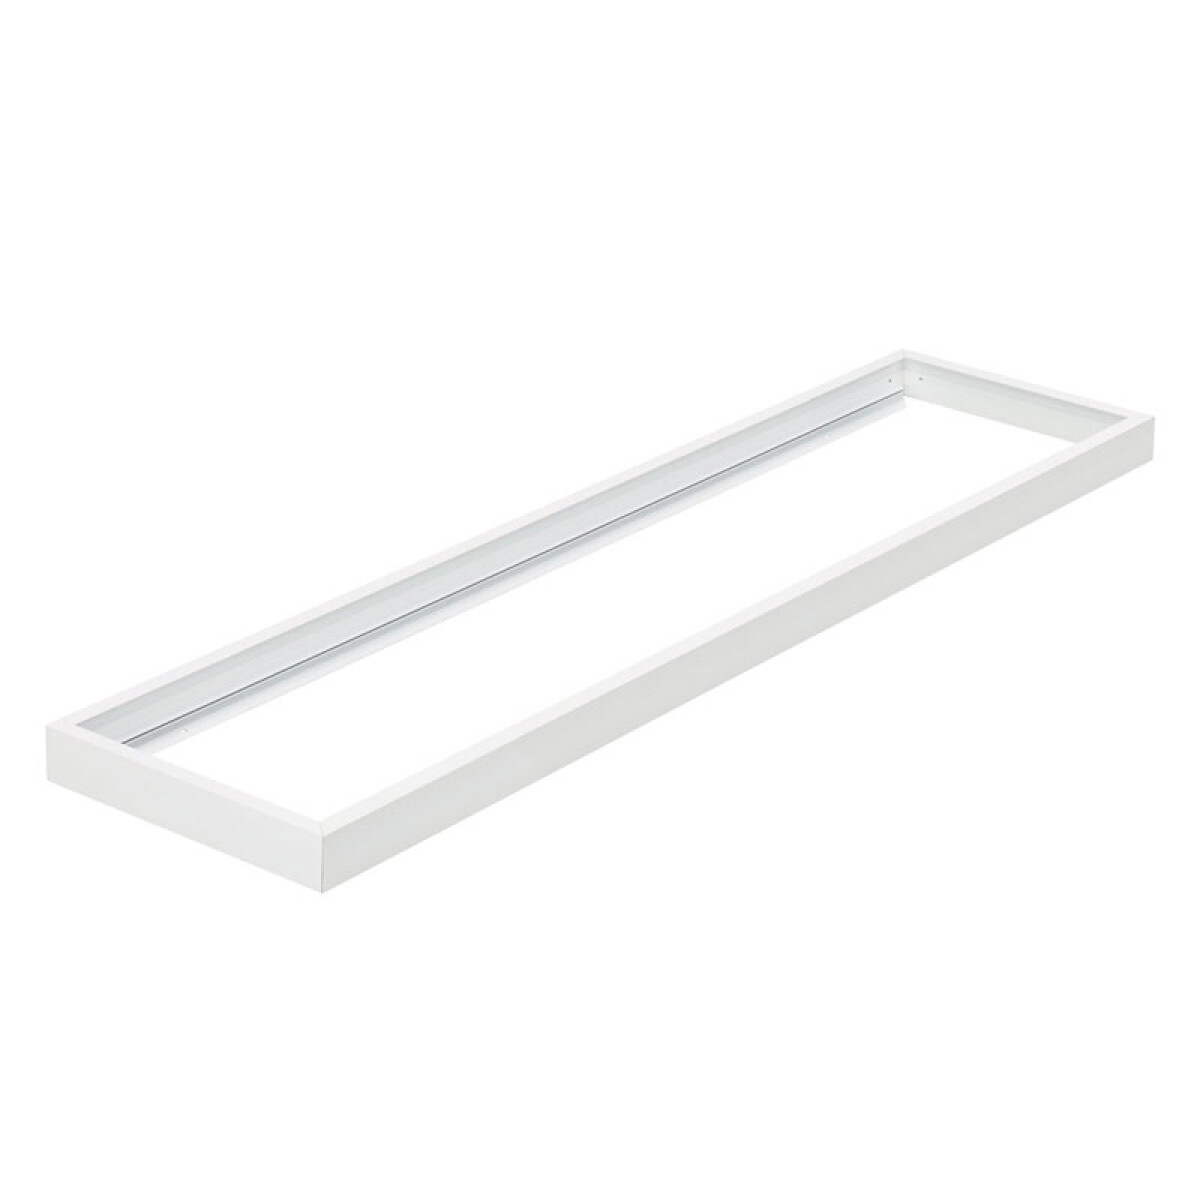 Marco alto blanco p/adosar panel LED de 1215X305mm - IX2246 